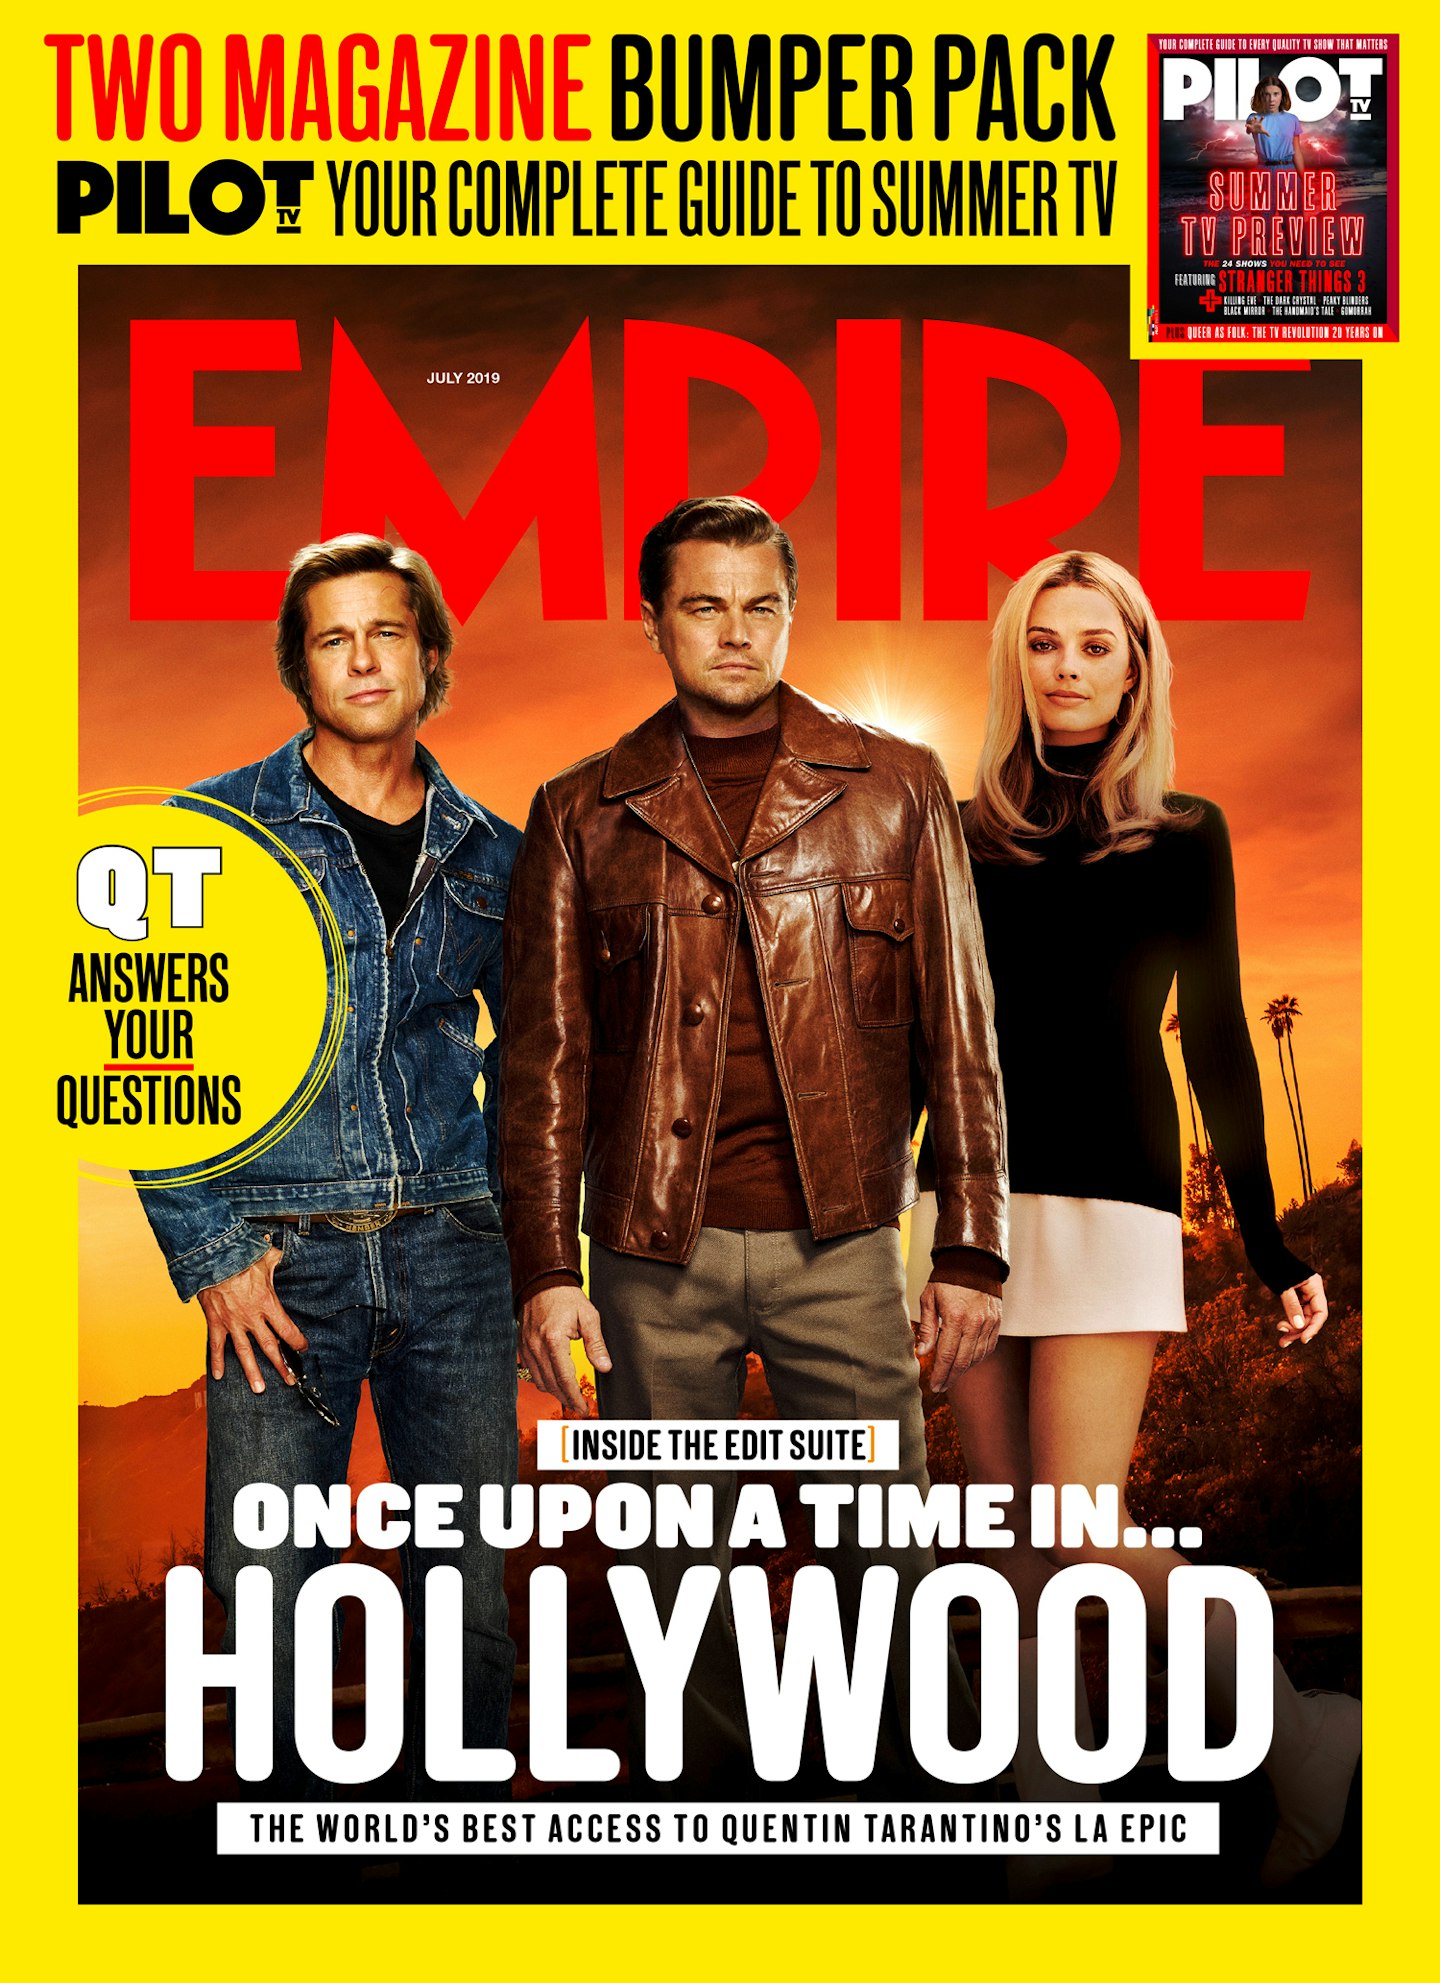 https://images.bauerhosting.com/legacy/empire-images/articles/5cfa860c133d503e3a4aba7b/empire-july-2019-newsstand-cover.jpg?auto=format&w=1440&q=80